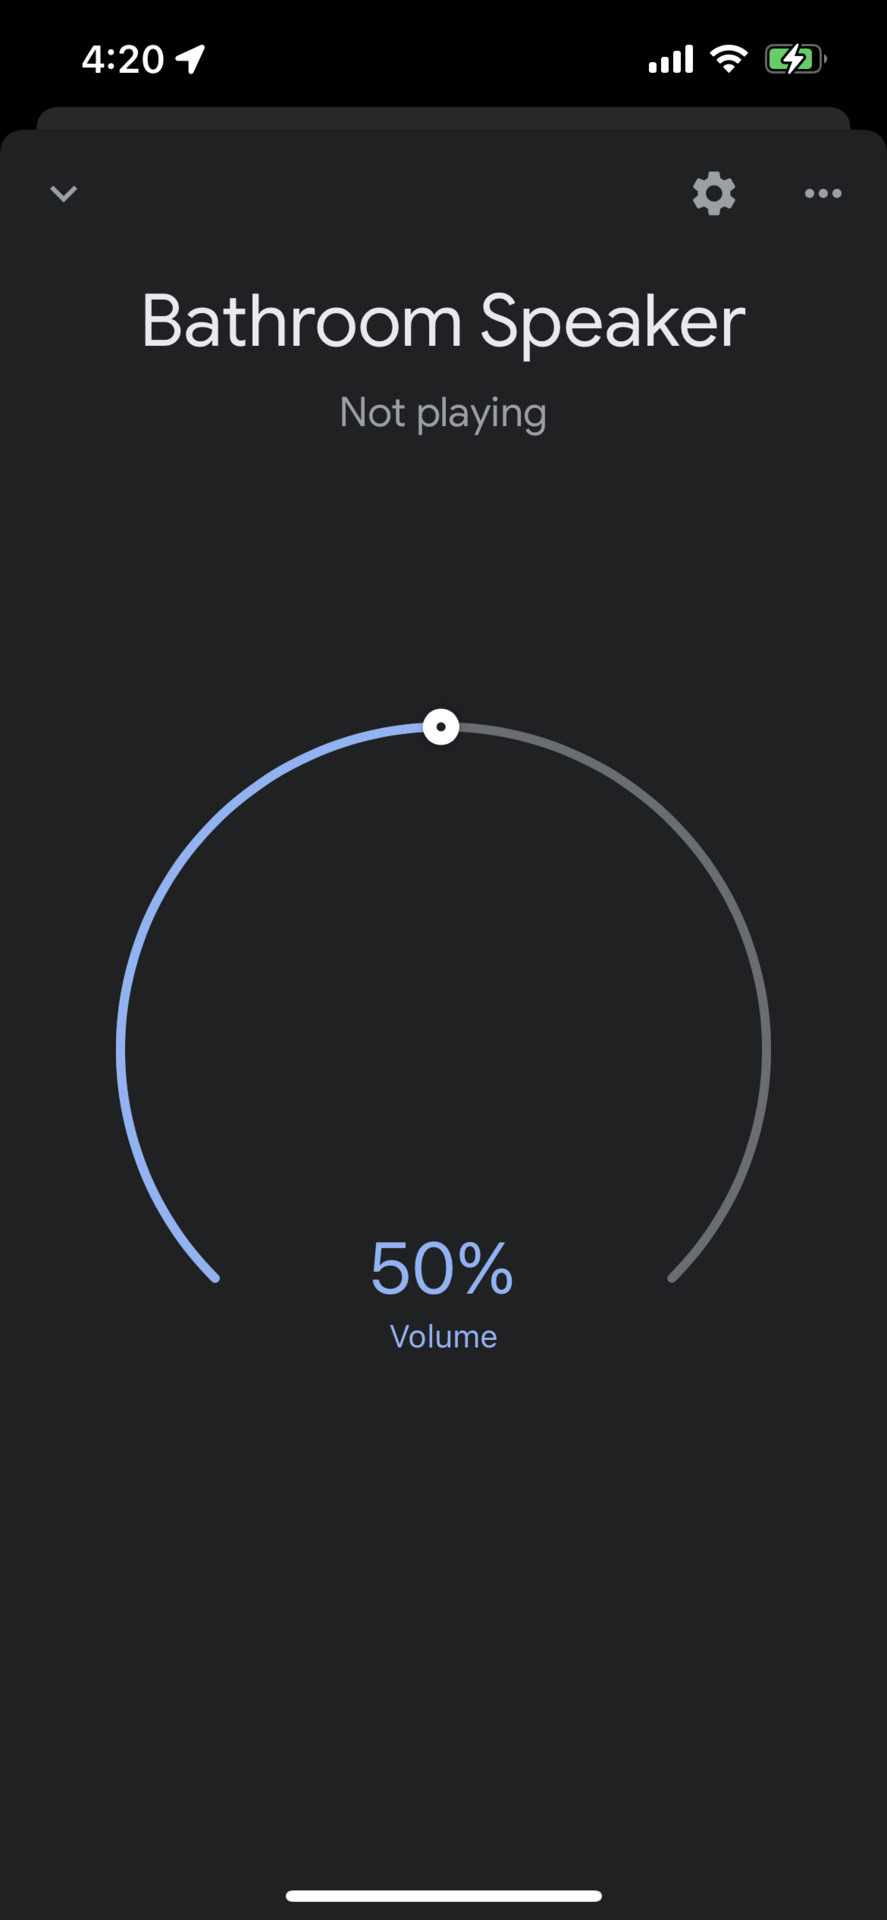 Controlling speaker volume in the Google Home app